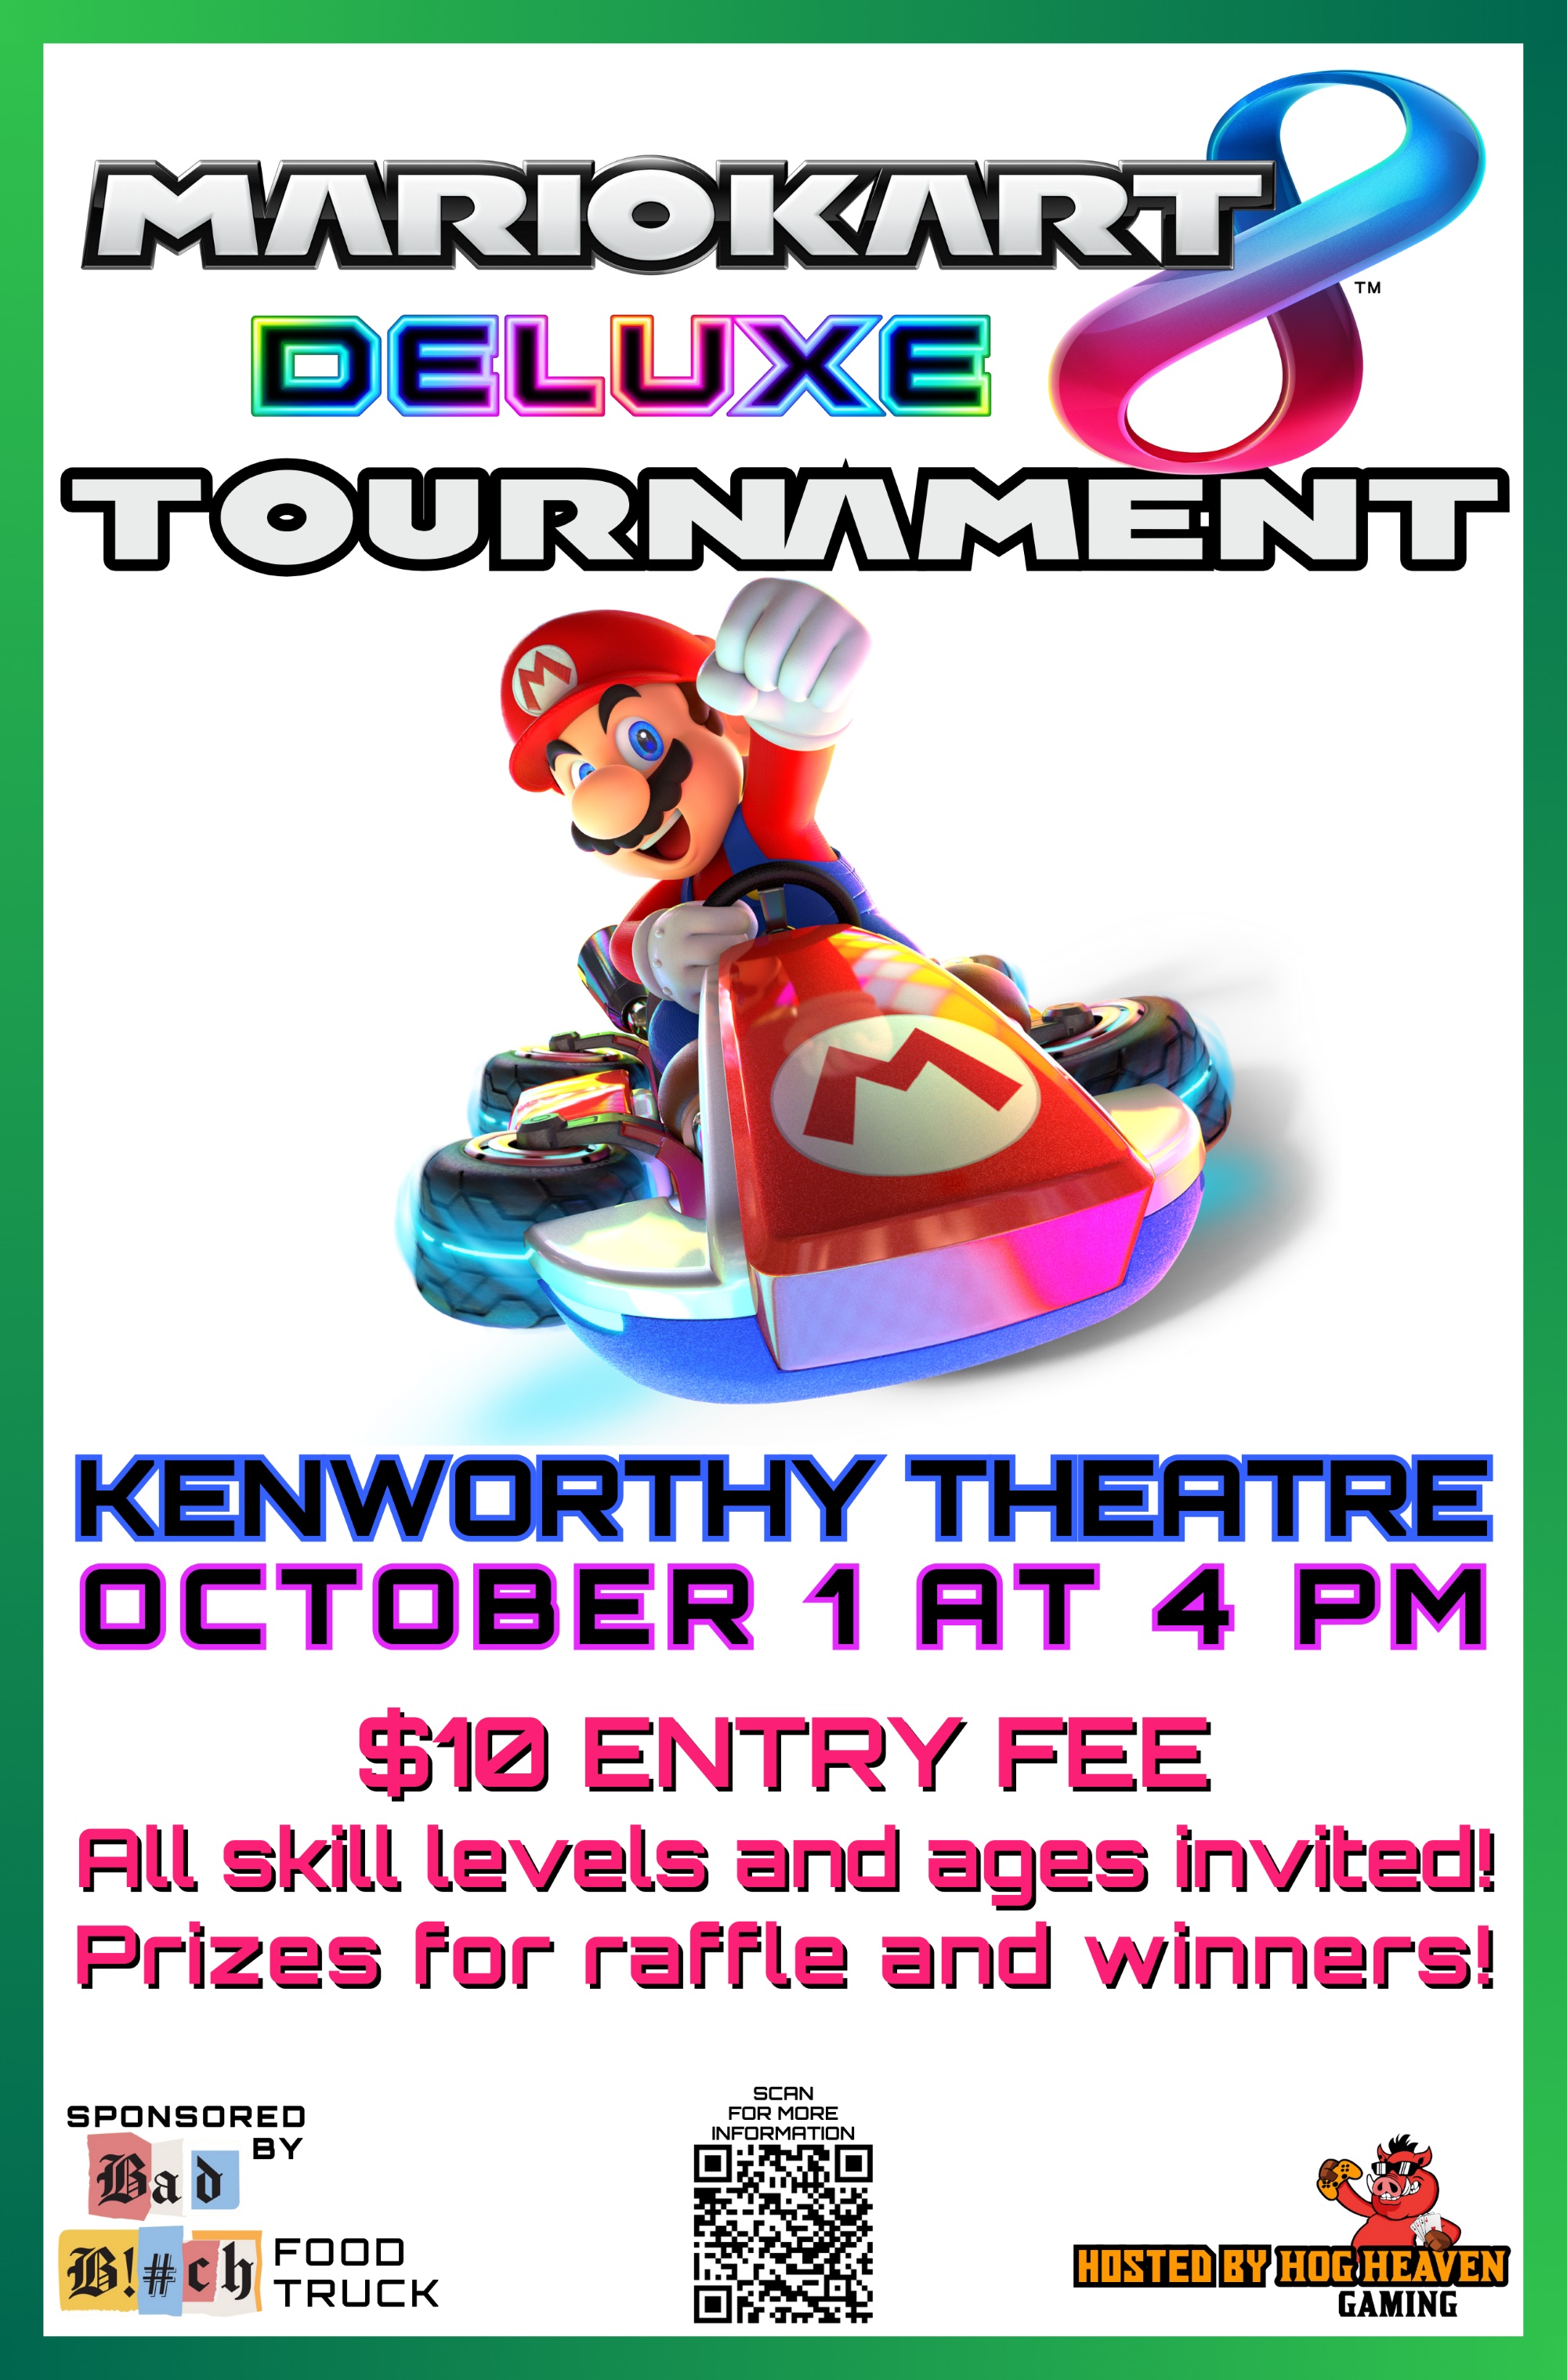 Mario Kart Gaming Tournament!